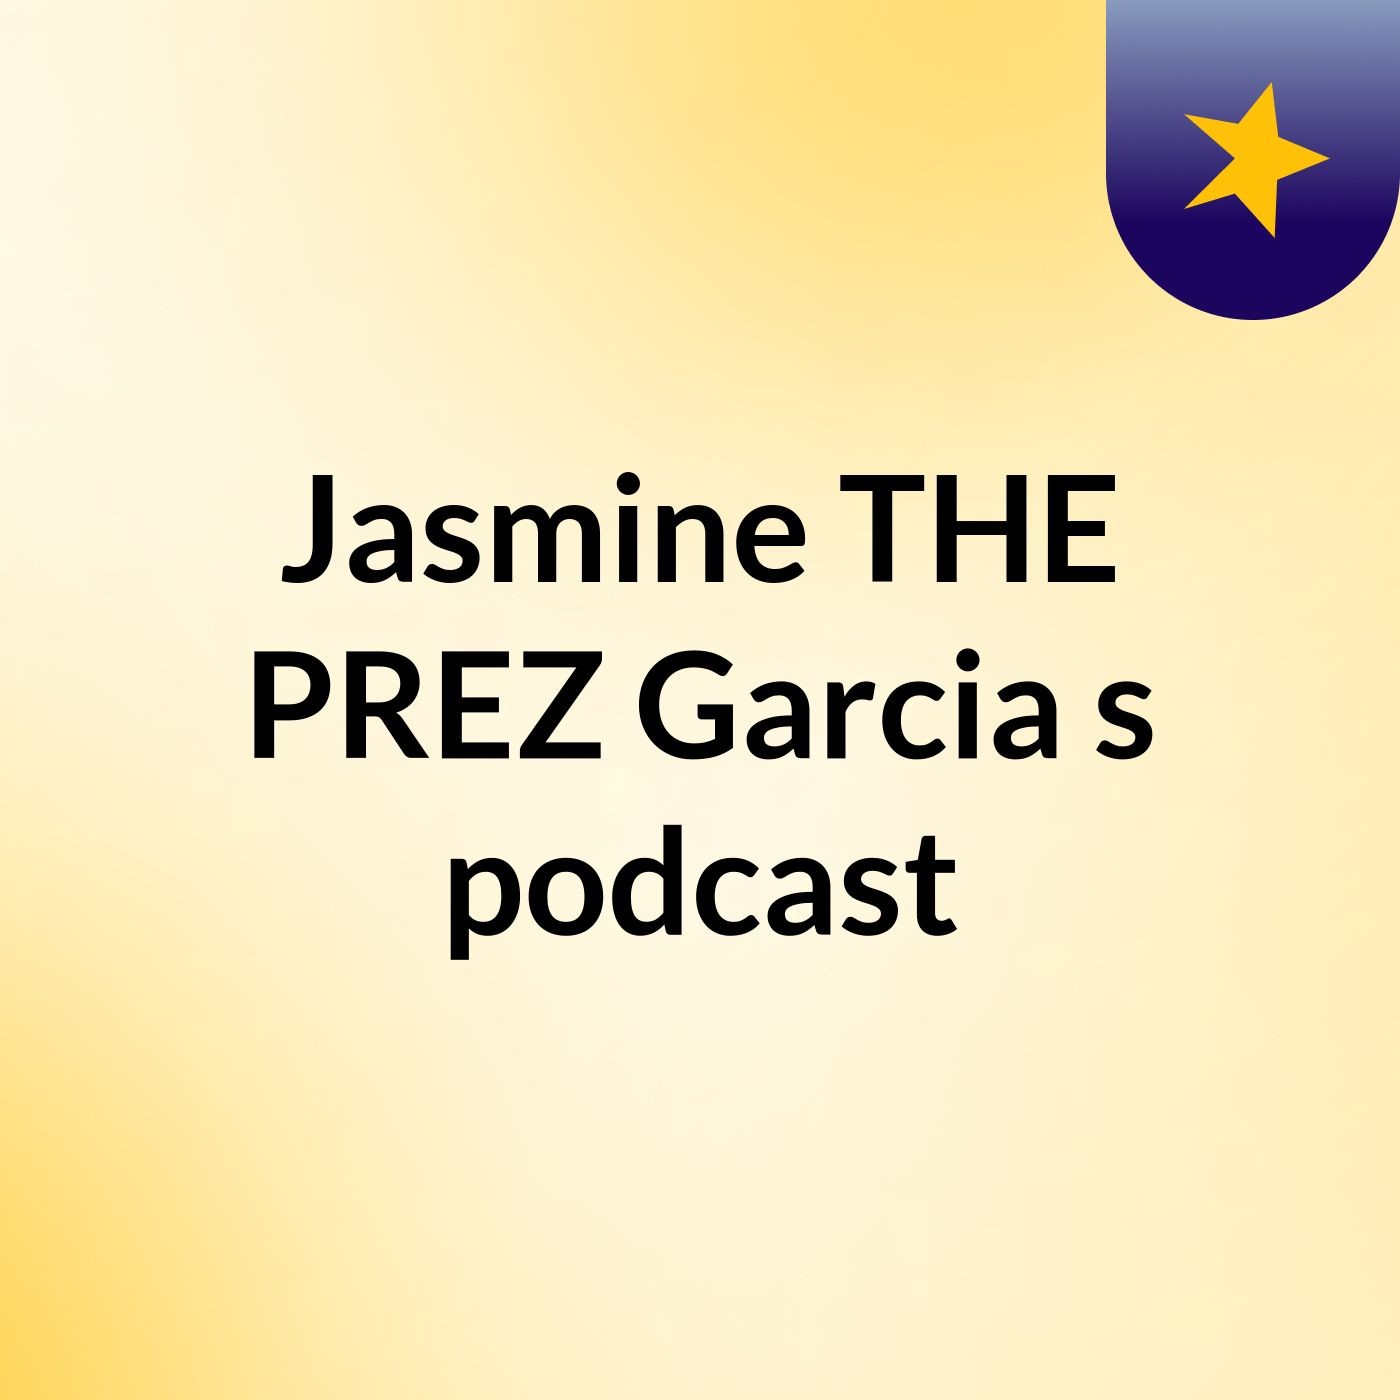 Episode 6 - Jasmine THE PREZ Garcia's podcast